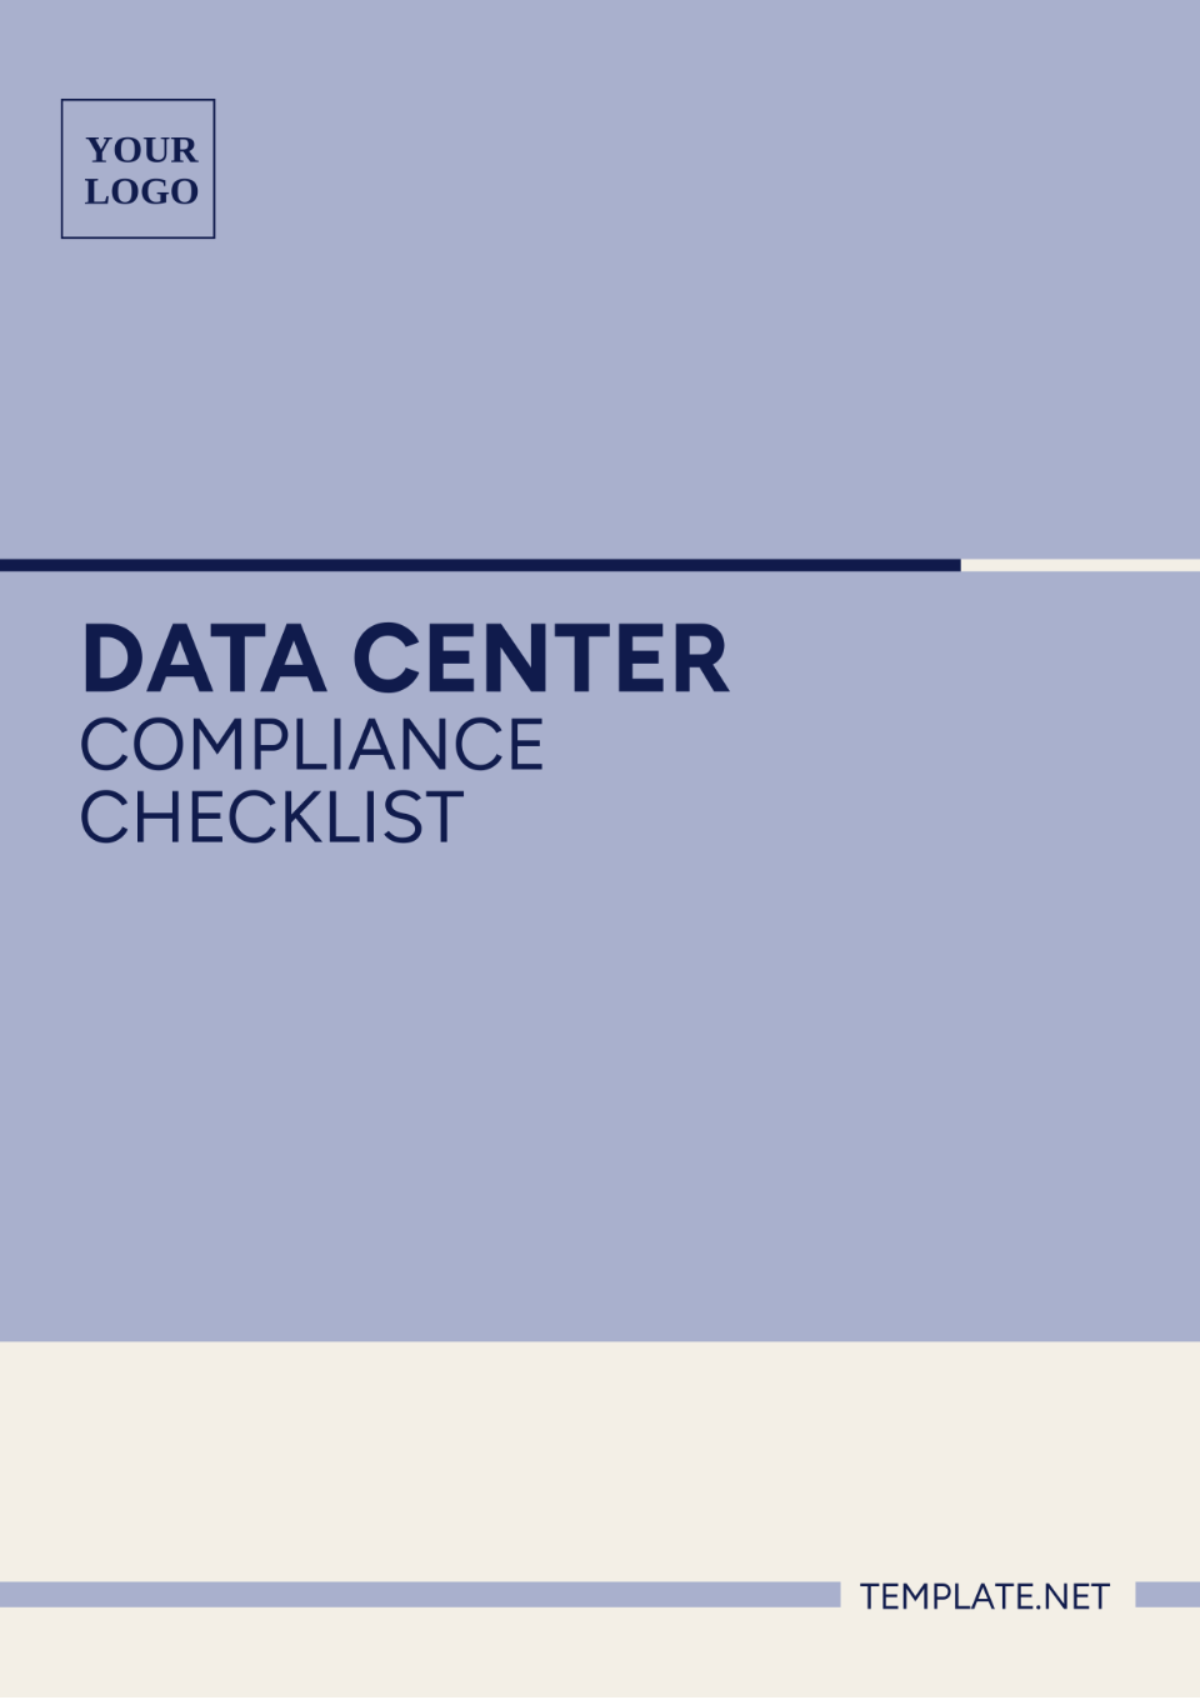 Data Center Compliance Checklist Template